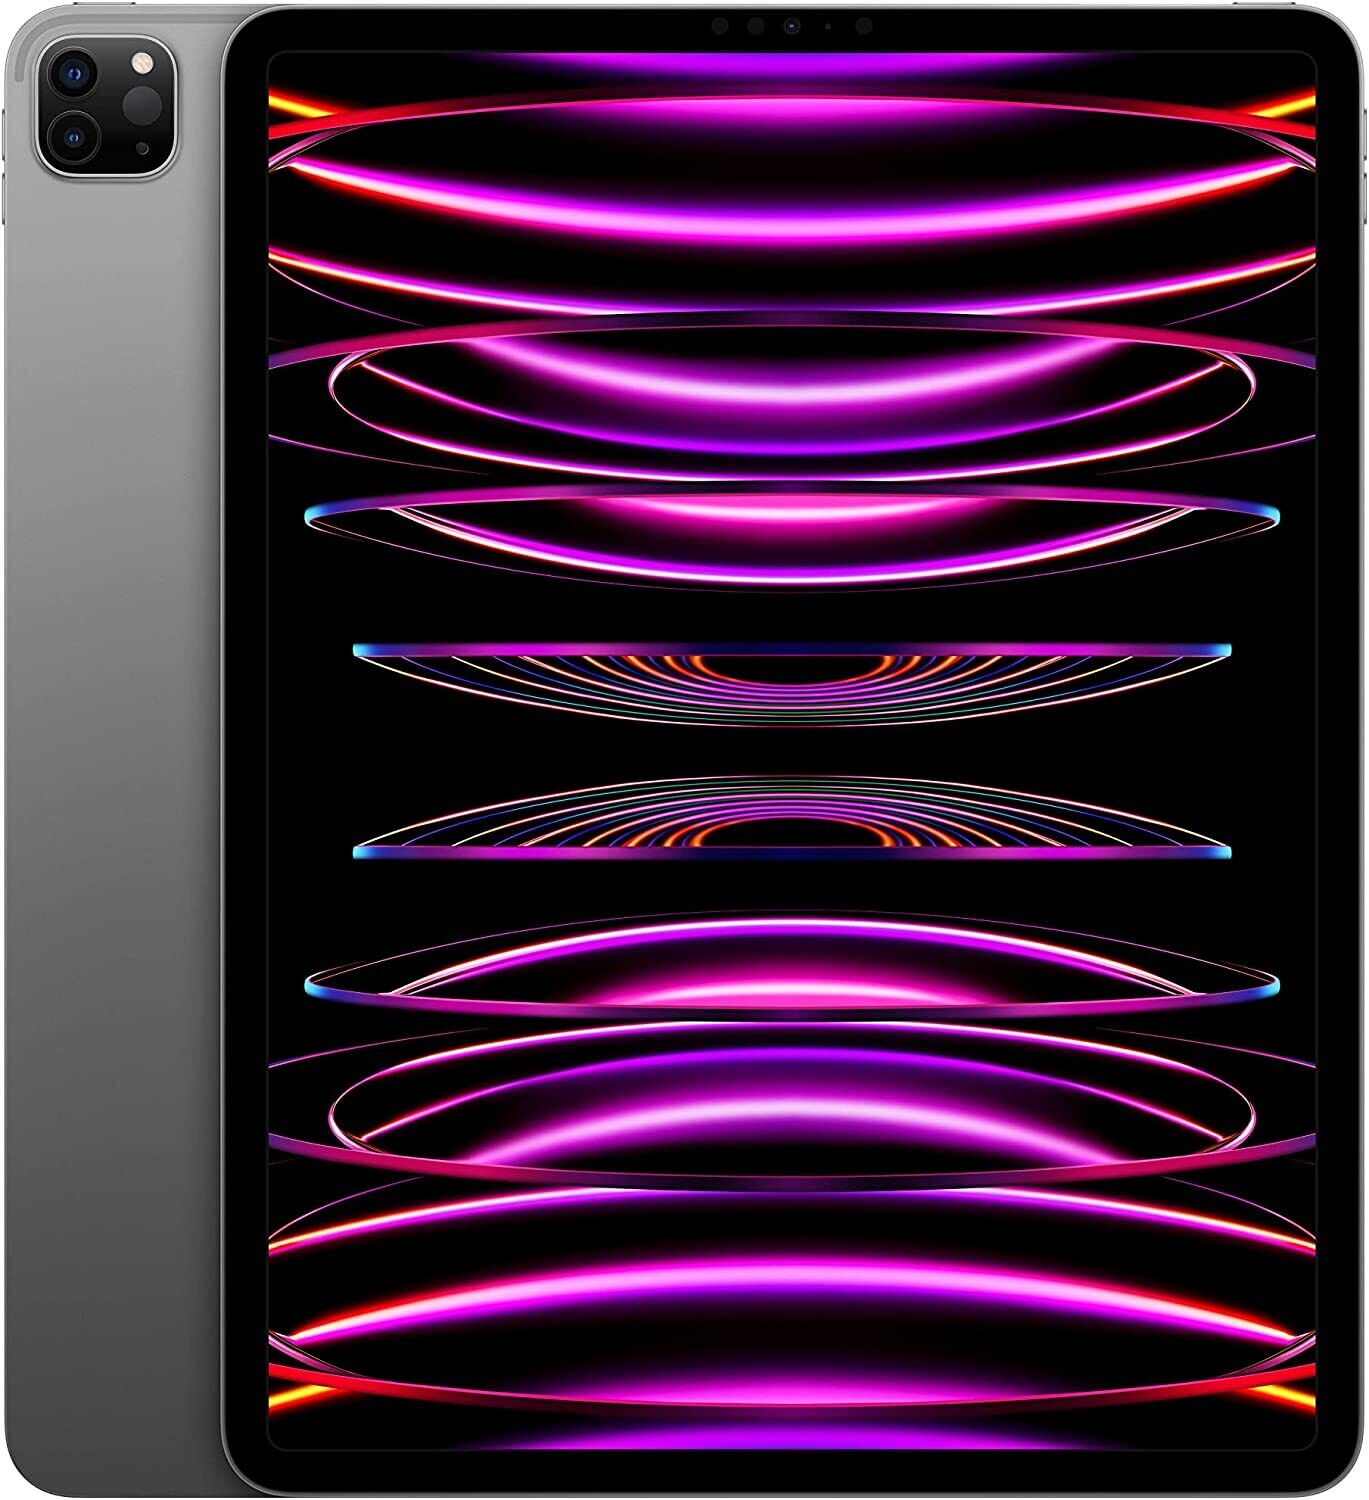 2022 Apple 12.9-inch iPad Pro (Wi-Fi, 128GB) - Space Gray (6th Generation)